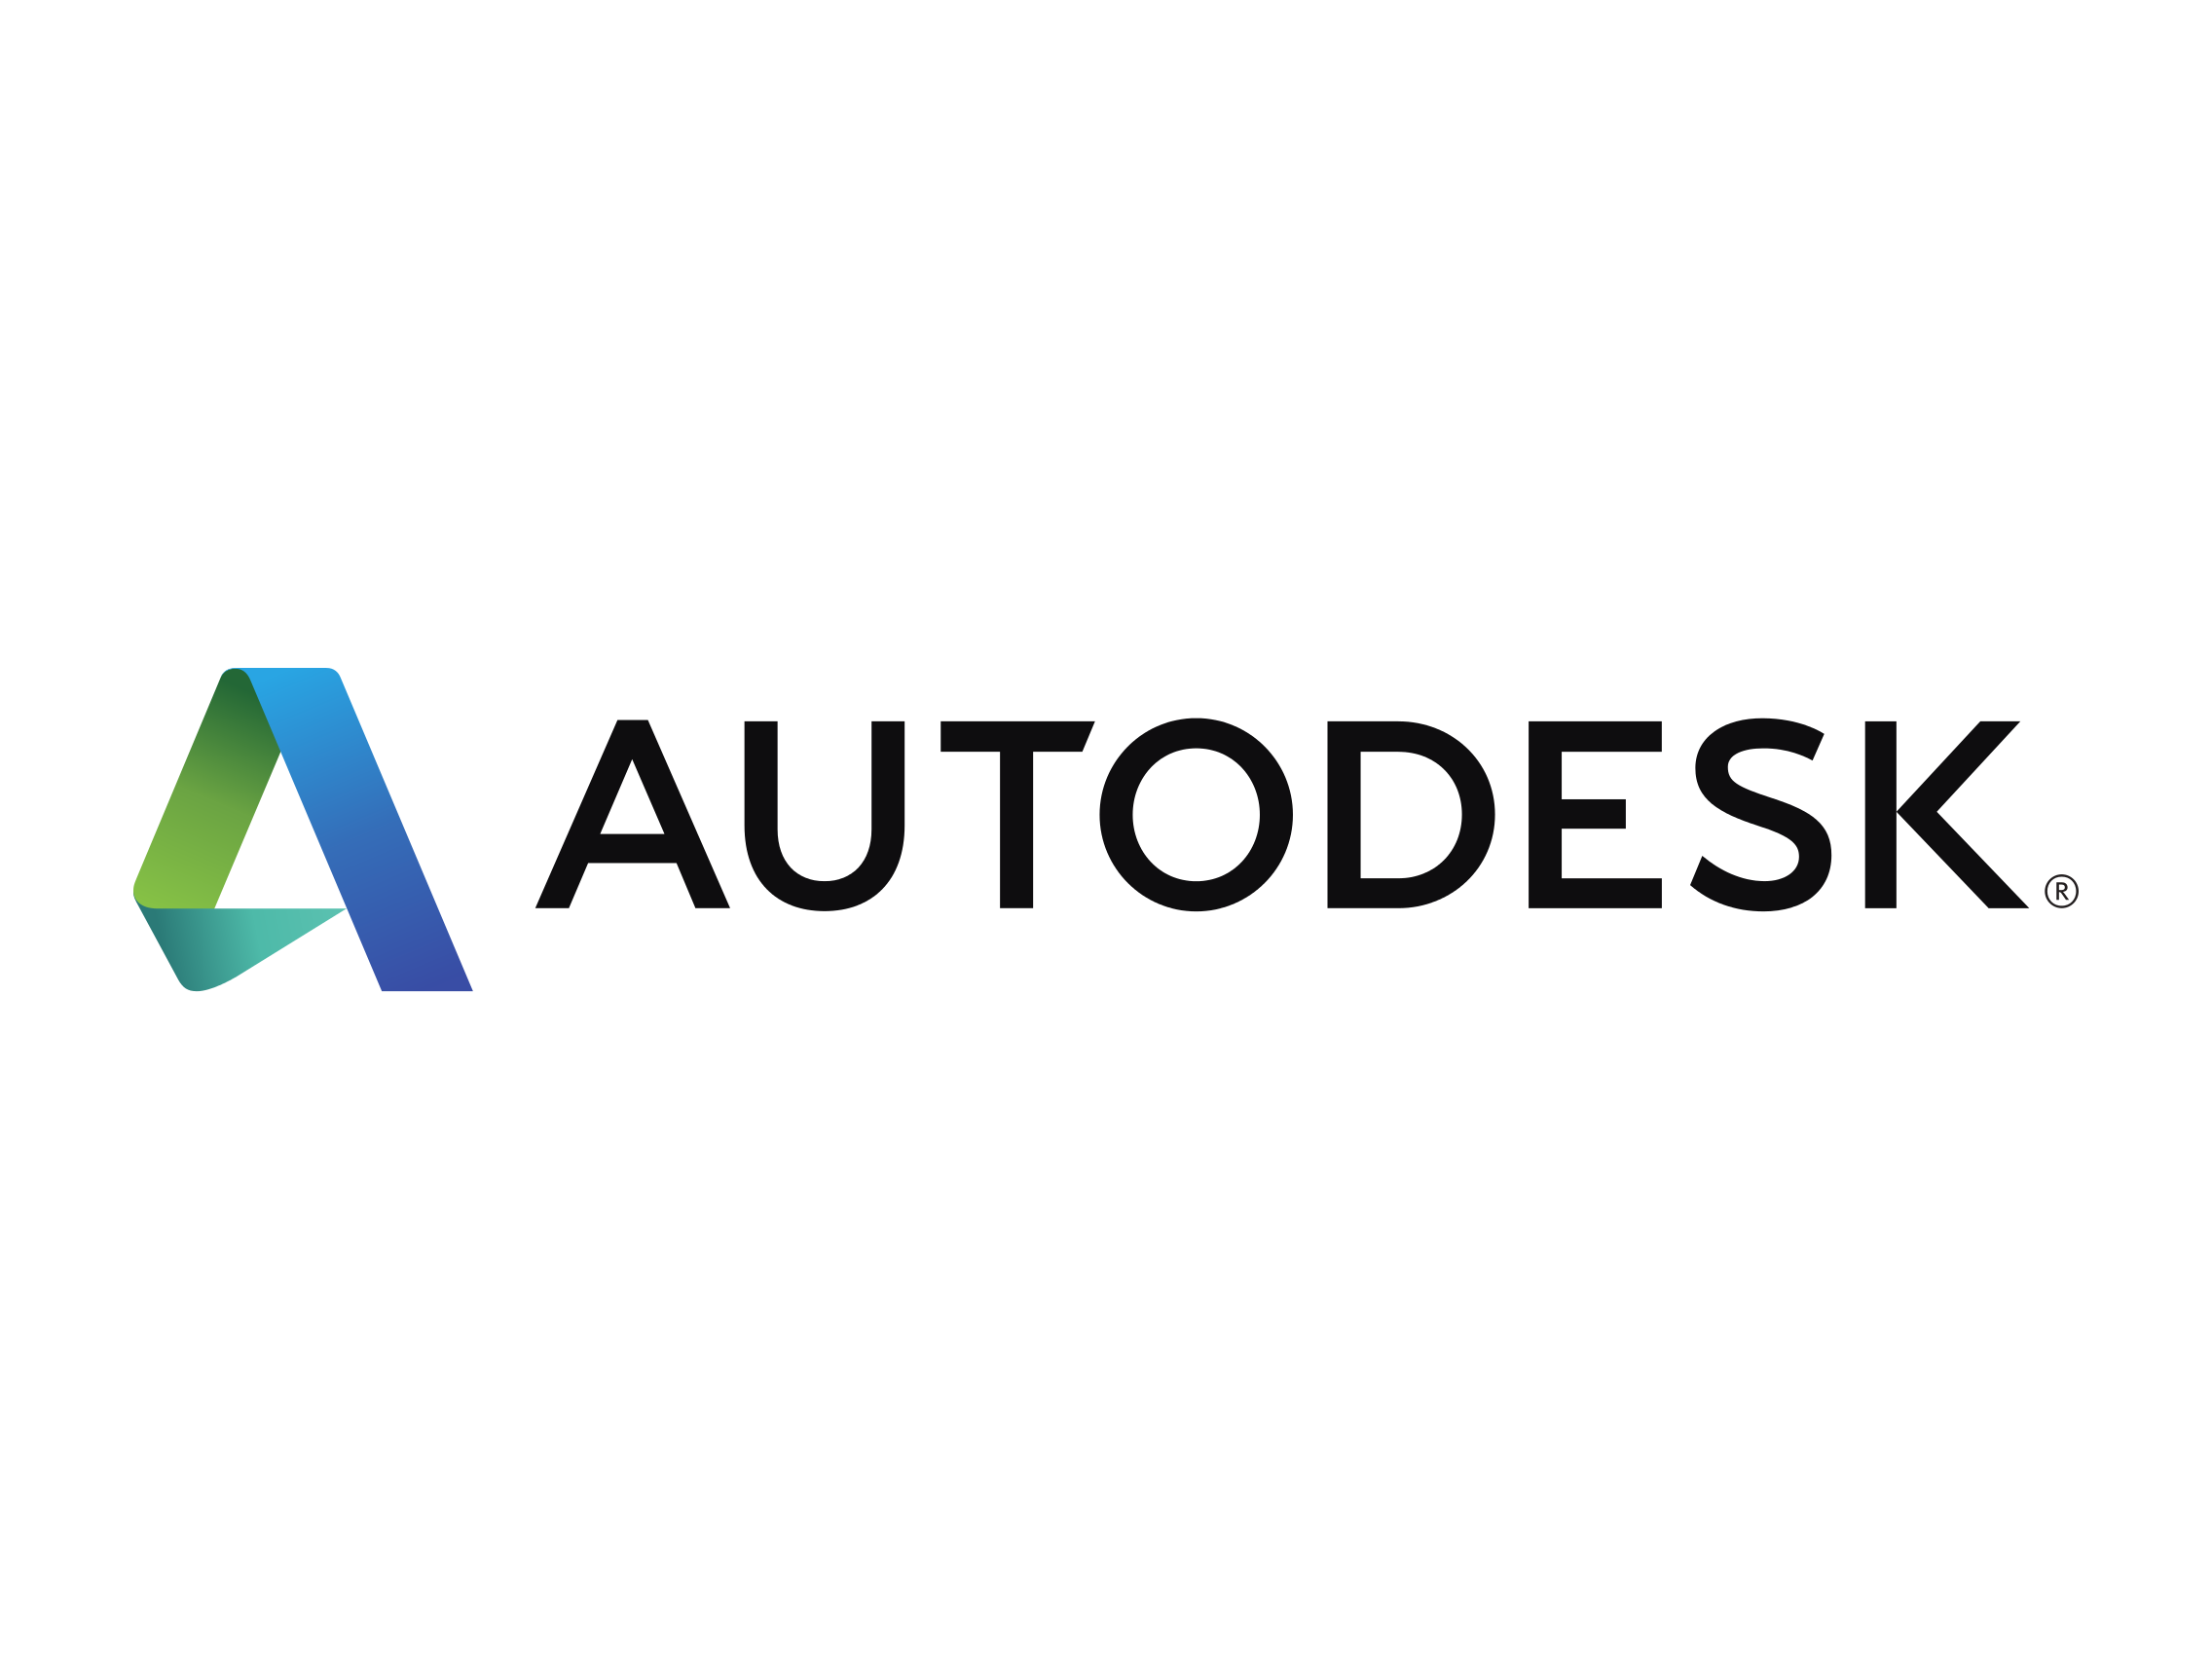  Autodesk's strategy 